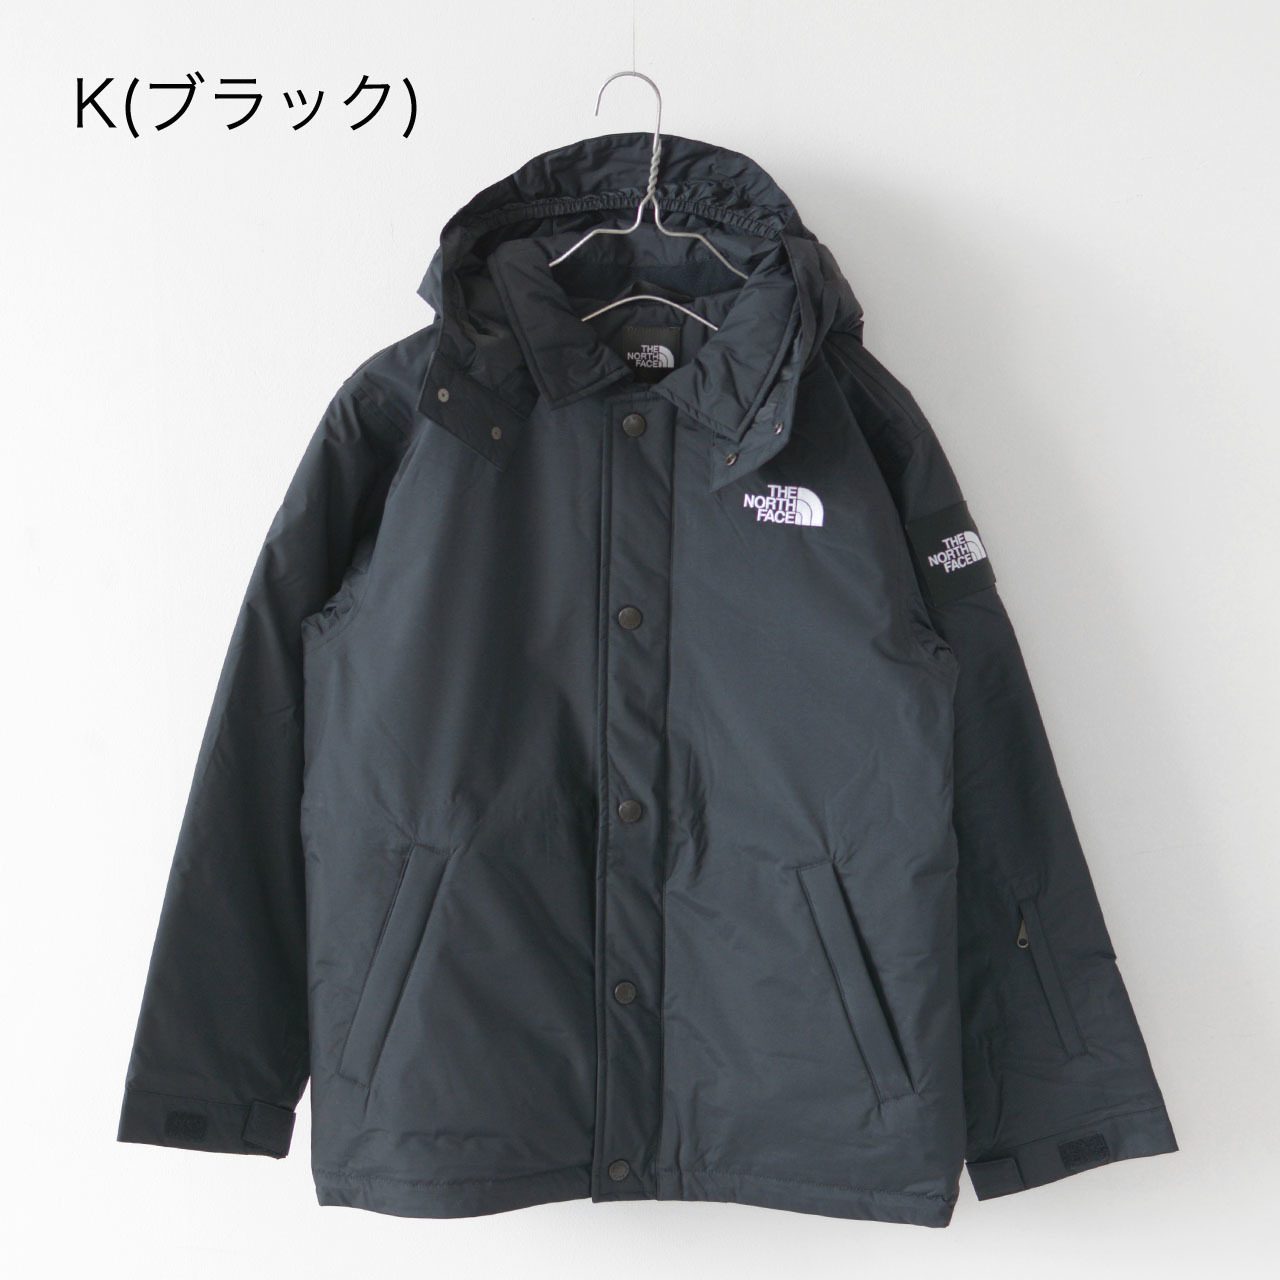 THE NORTH FACE [ザ ノースフェイス正規代理店] Ks Winter Coach Jacket [NSJ62144]_f0051306_10474859.jpg